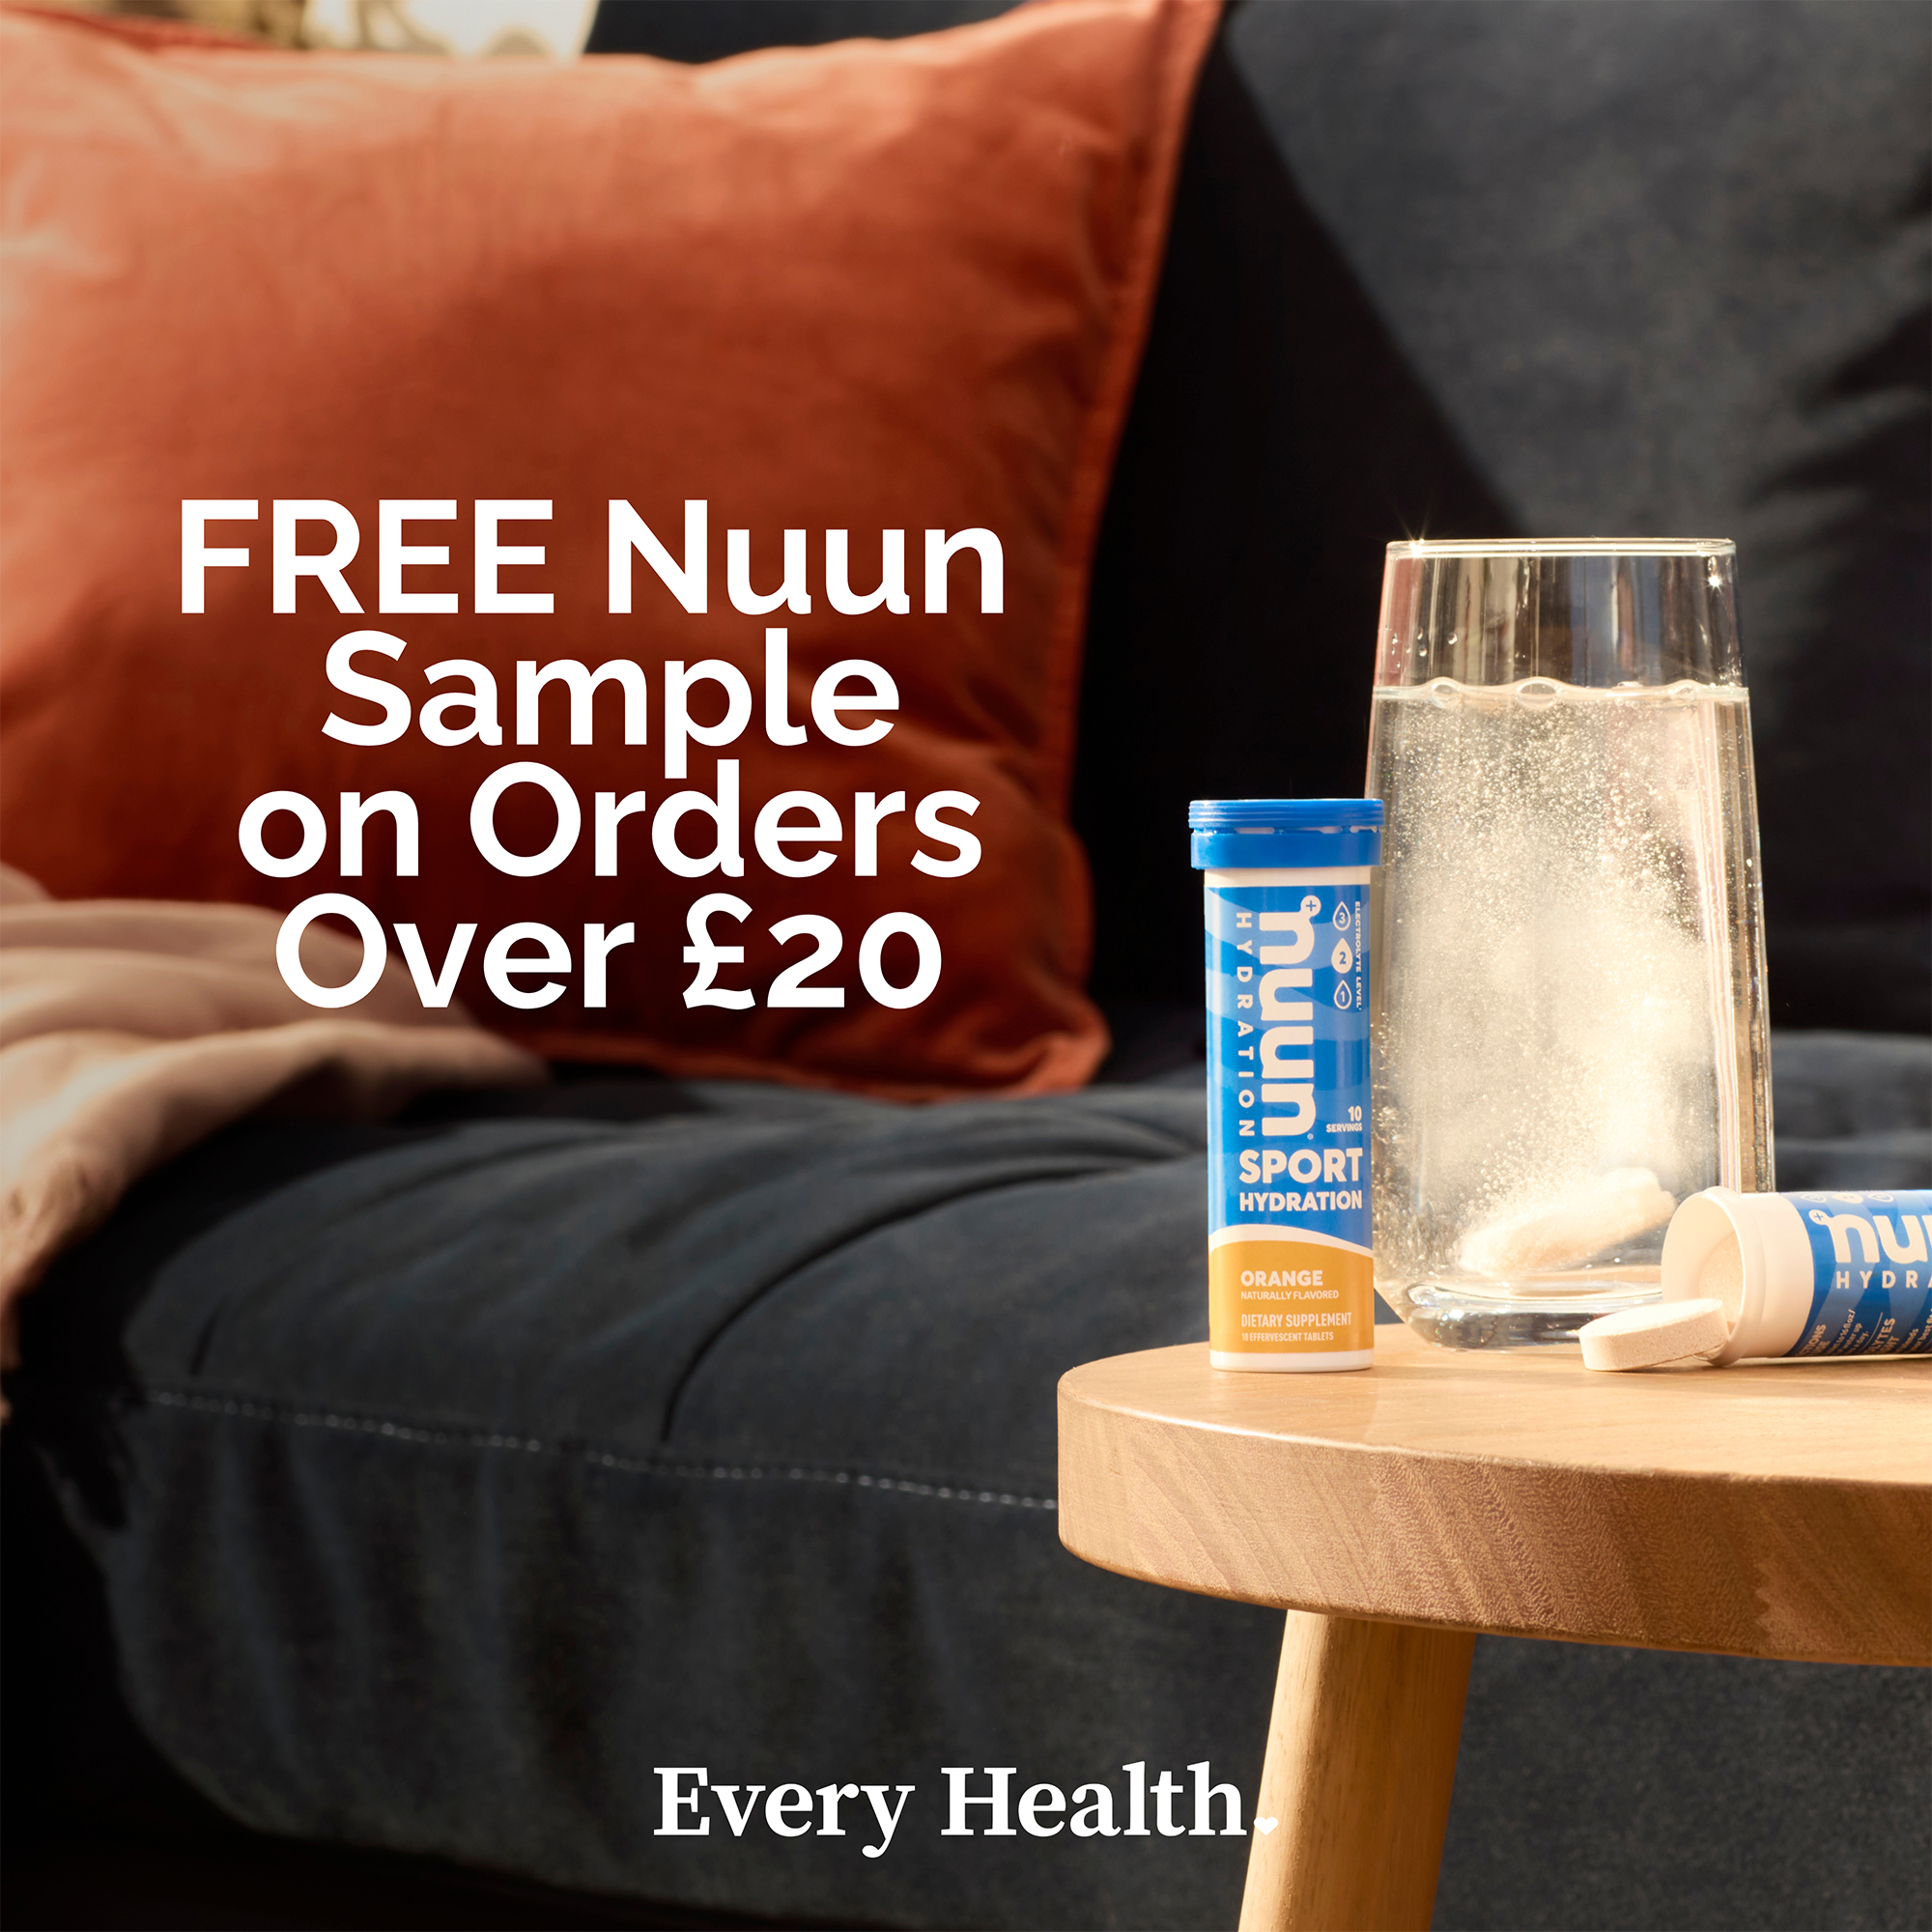 Free nuun sample on orders over £20. Every Health.